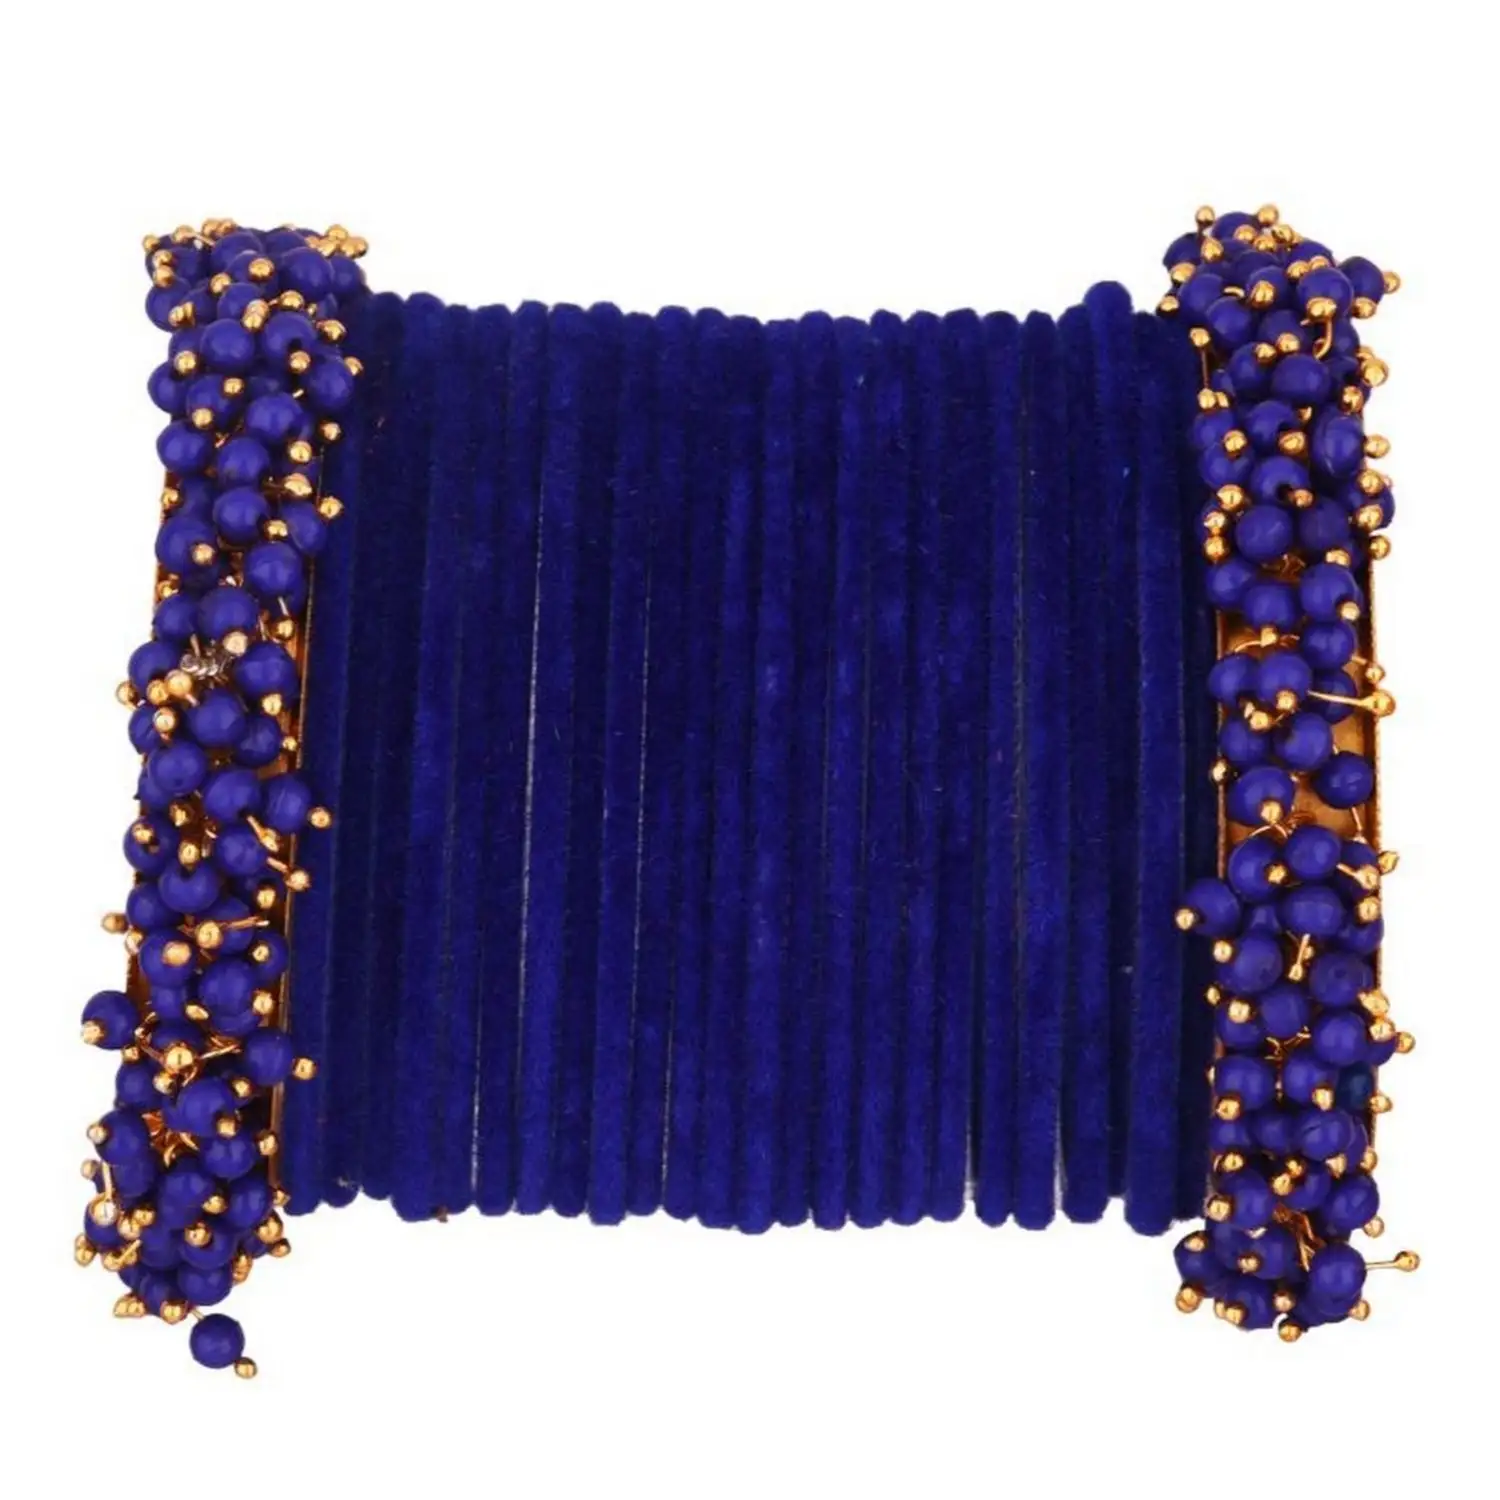 Joias de estilo indiano, joias banhadas a ouro, pérola falsa, frisadas, azul, veludo, conjunto de pulseira para mulheres, jóias no atacado